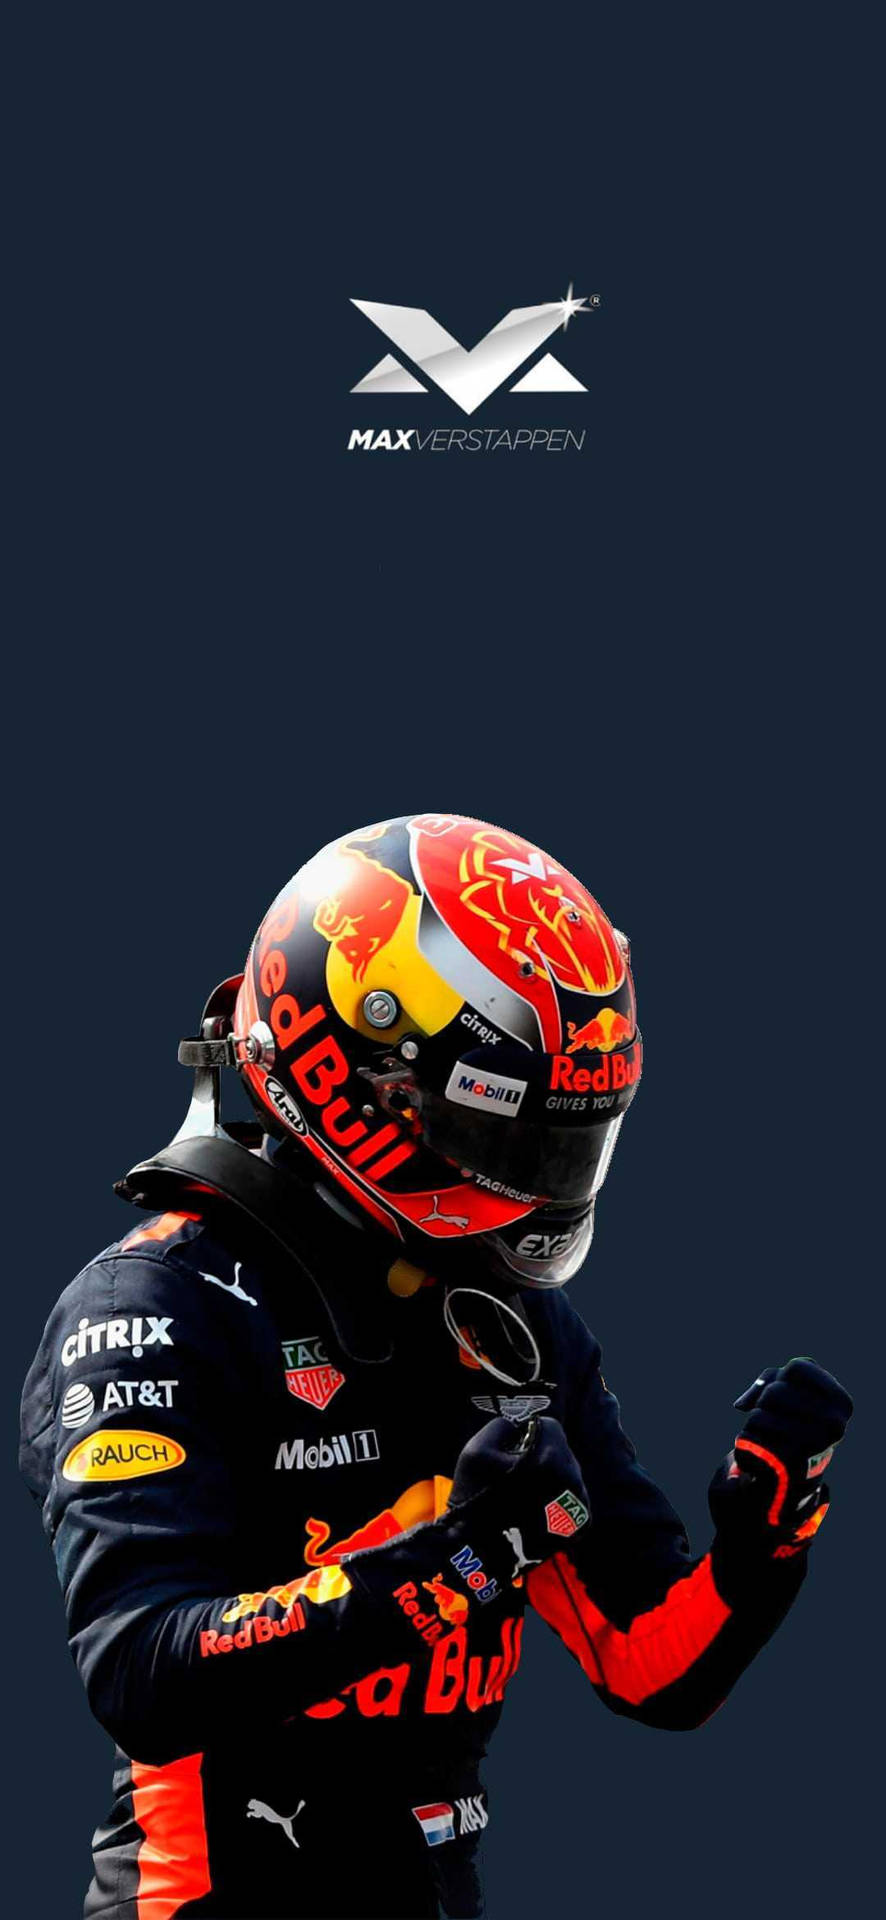 Max Verstappen In His Red Bull Racing Suit Background